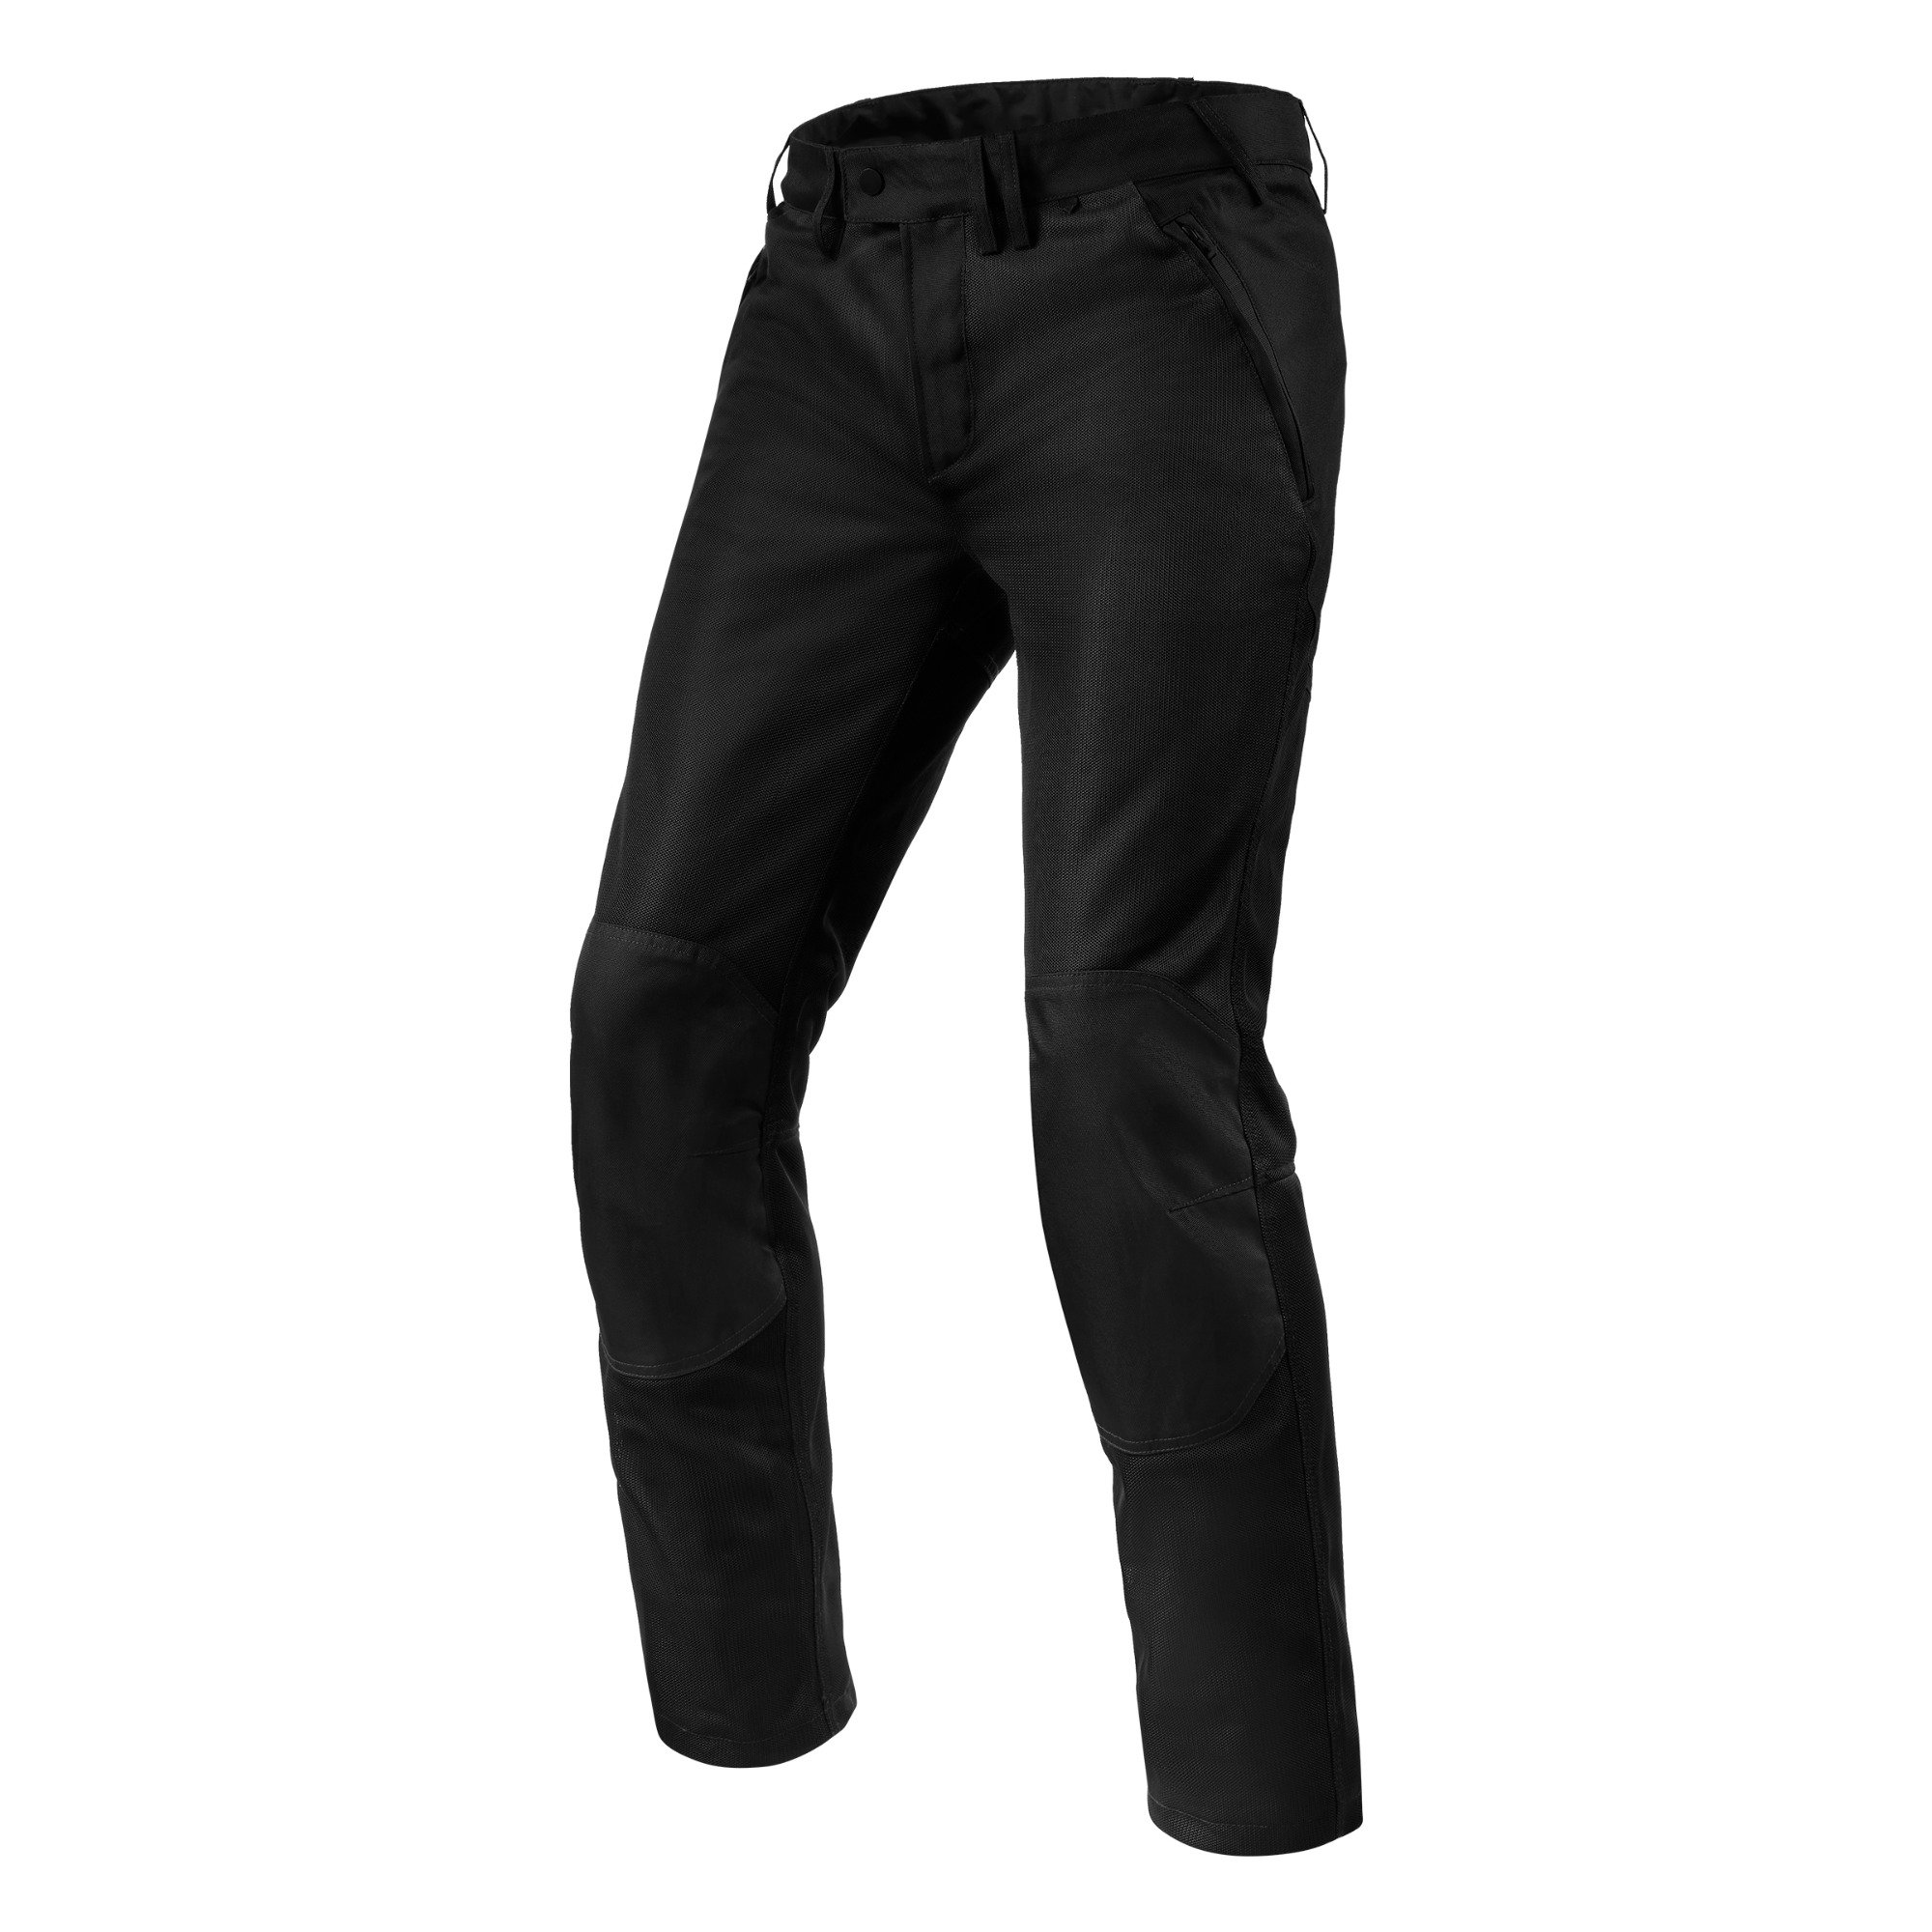 Image of REV'IT! Pants Eclipse 2 Black Standard Motorcycle Pants Size 3XL ID 8700001368551